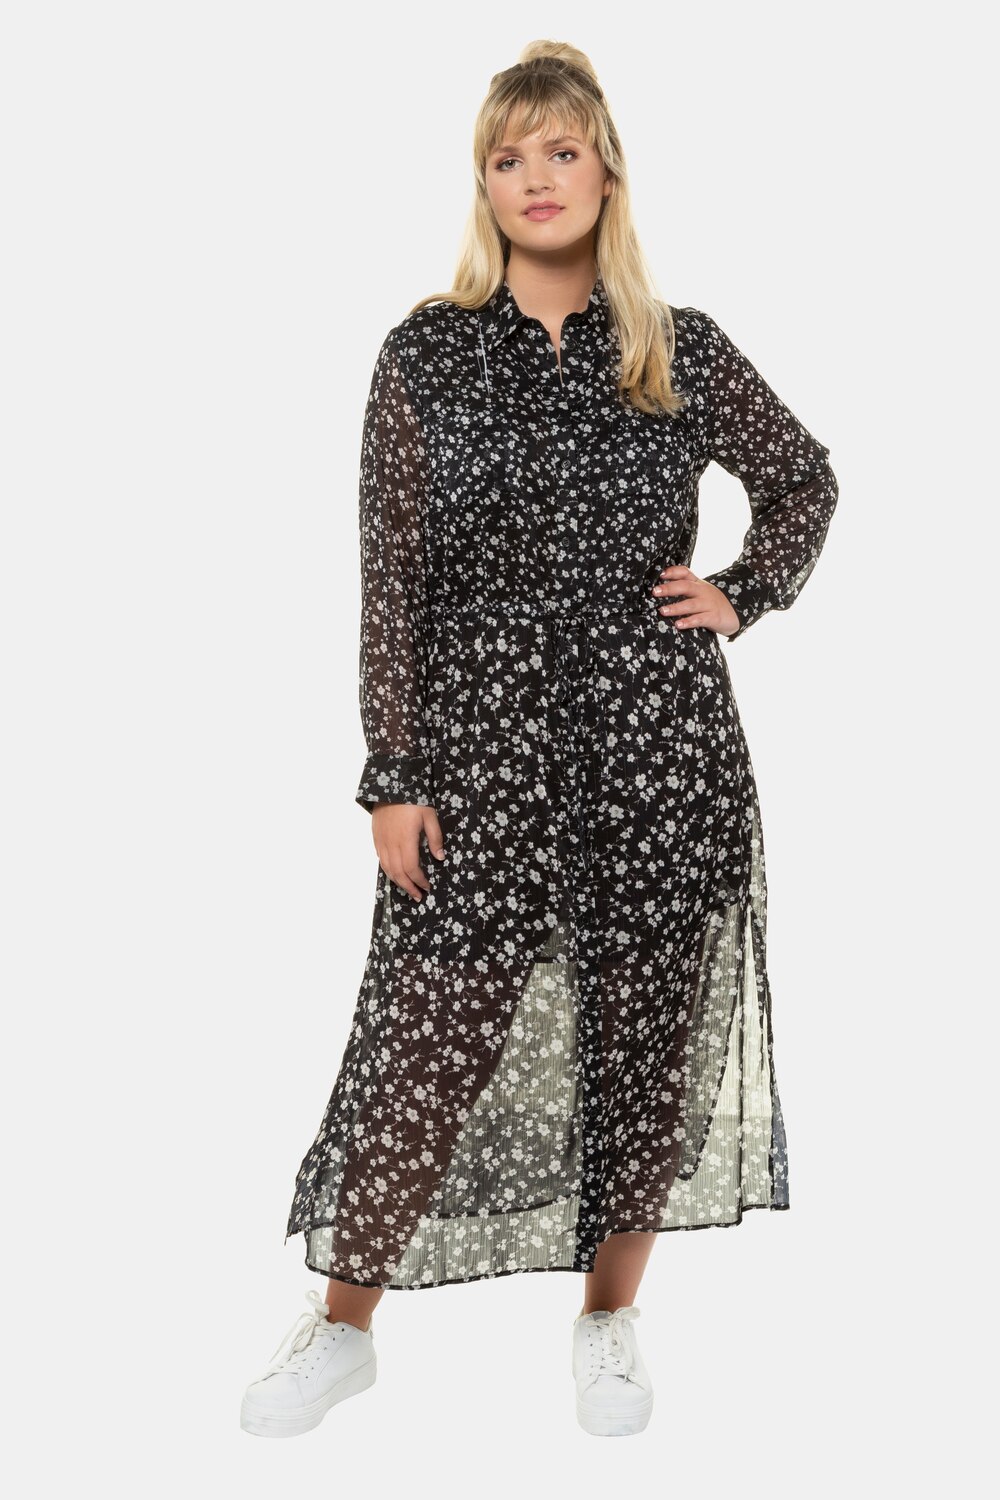 Plus Size Chiffon Floral Print Button Front Lined Shirt Dress, Woman, black, size: 24/26, polyester, Ulla Popken